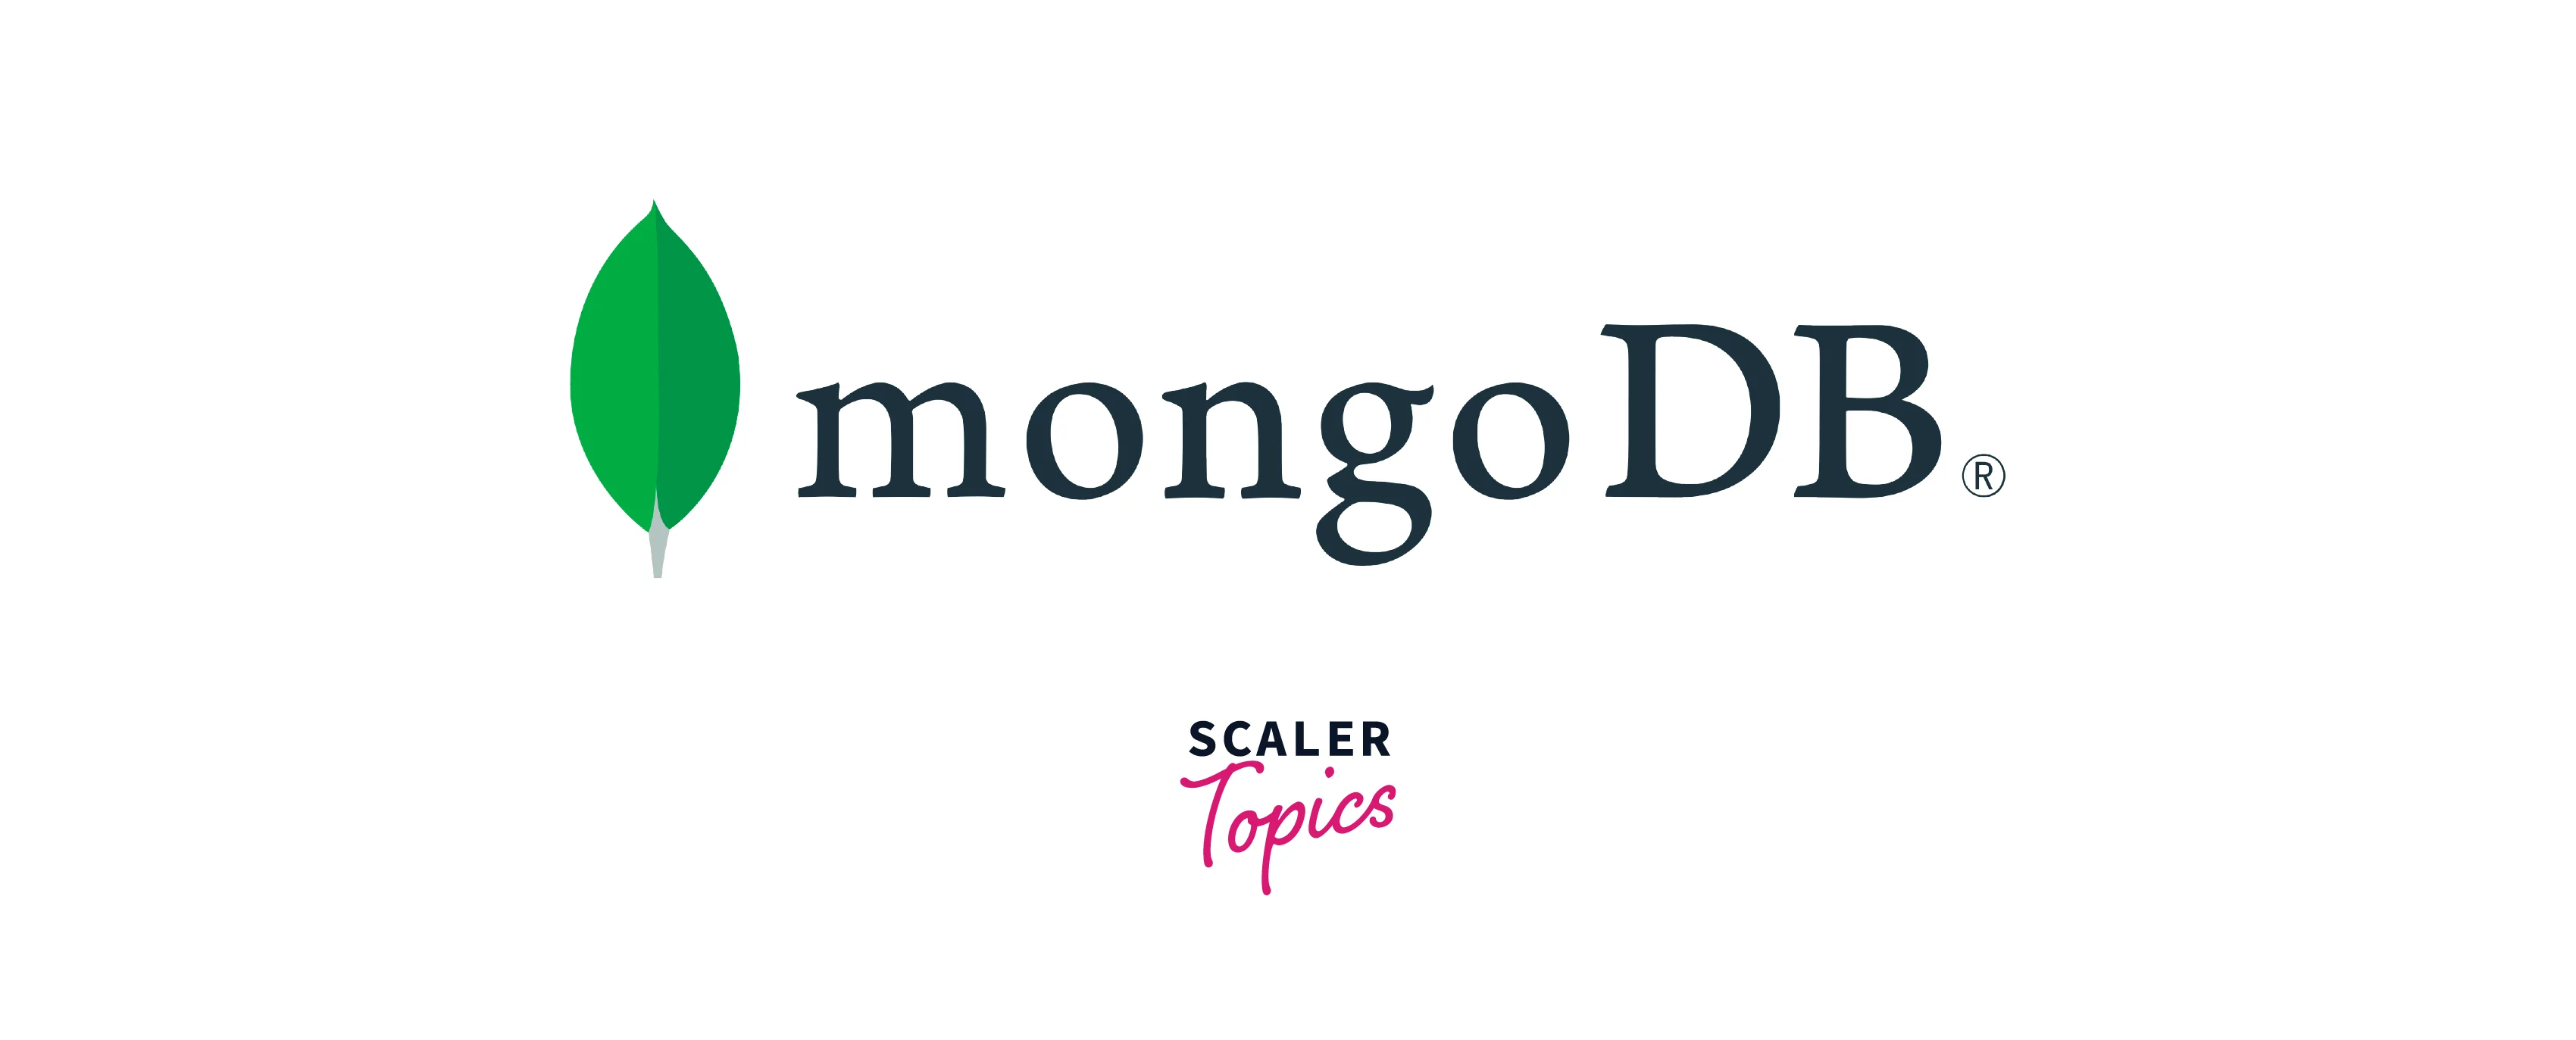 big data analytics tool mongodb